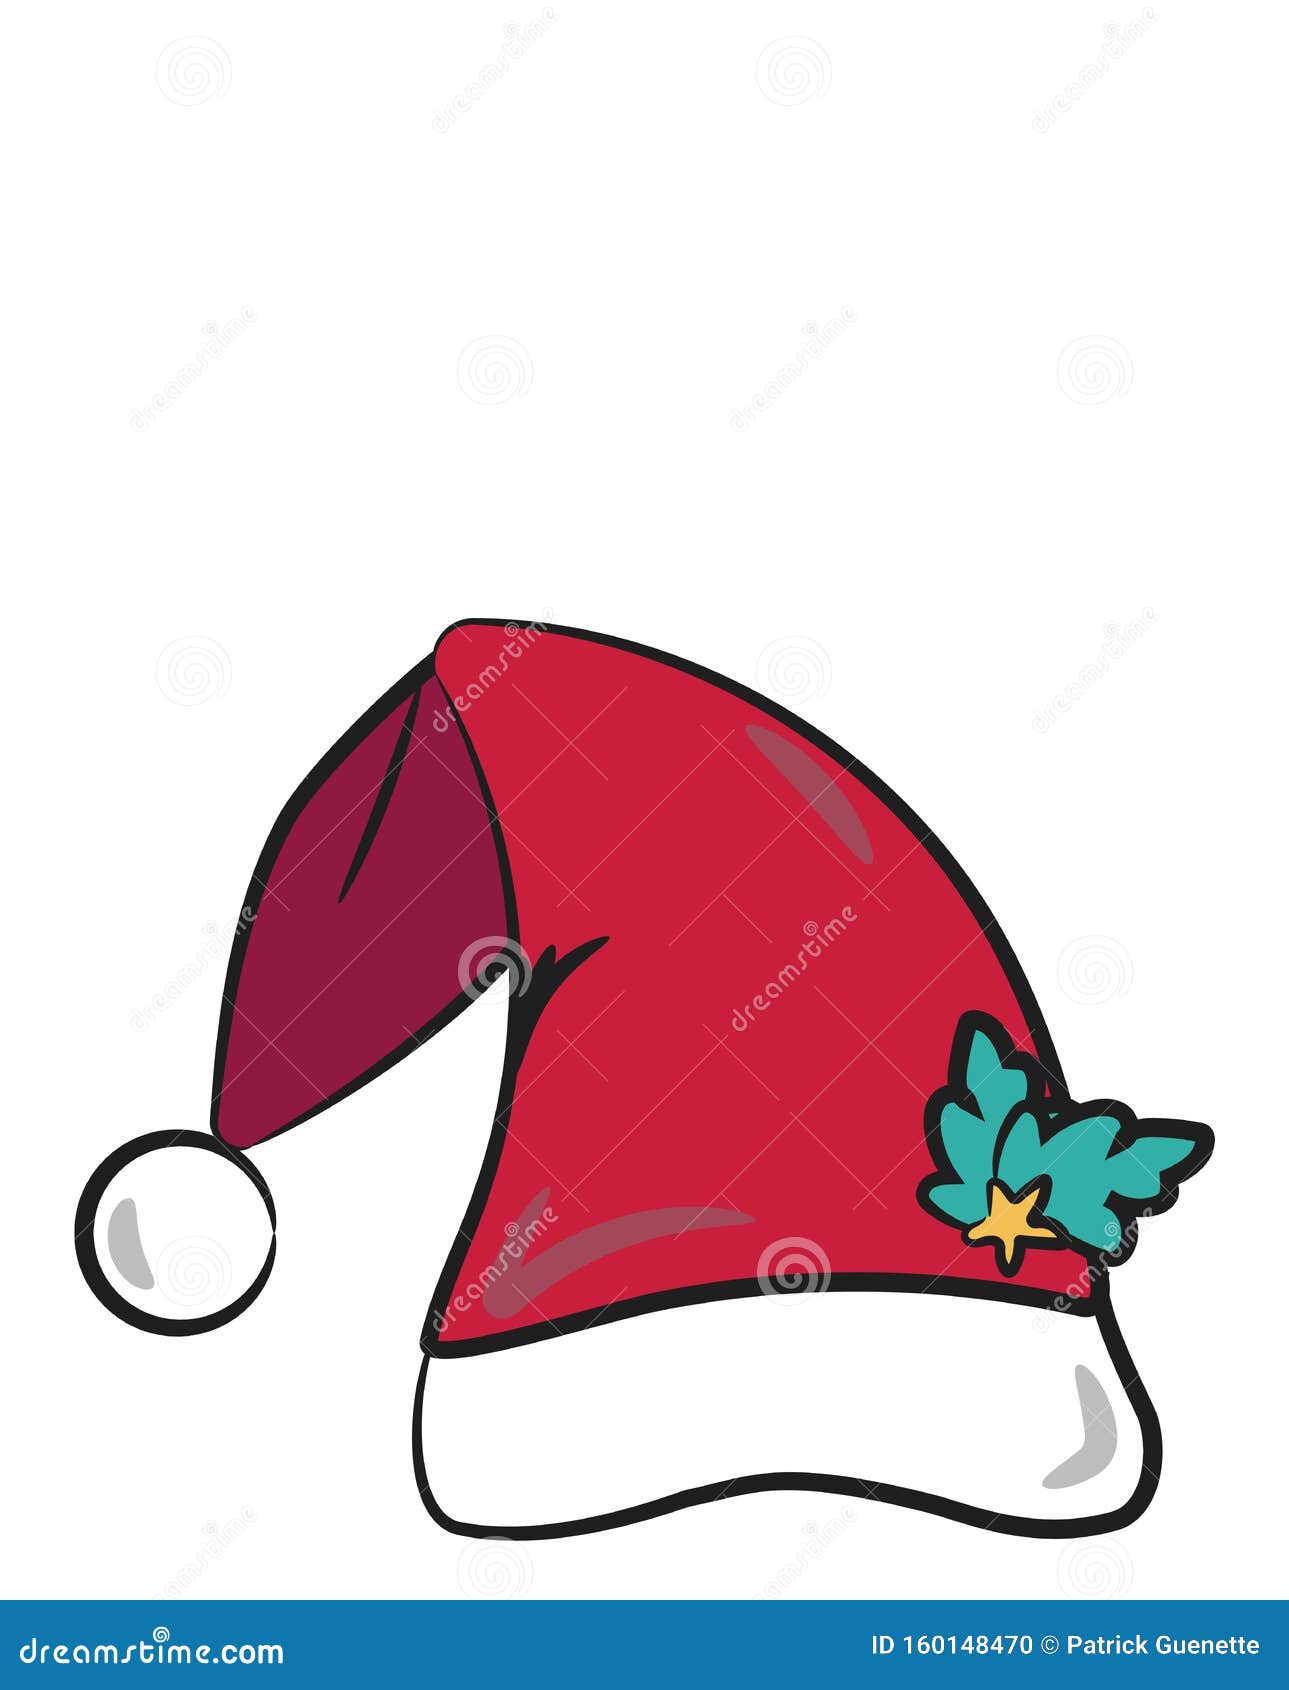 Premium Vector | Sketches of various santa claus hats